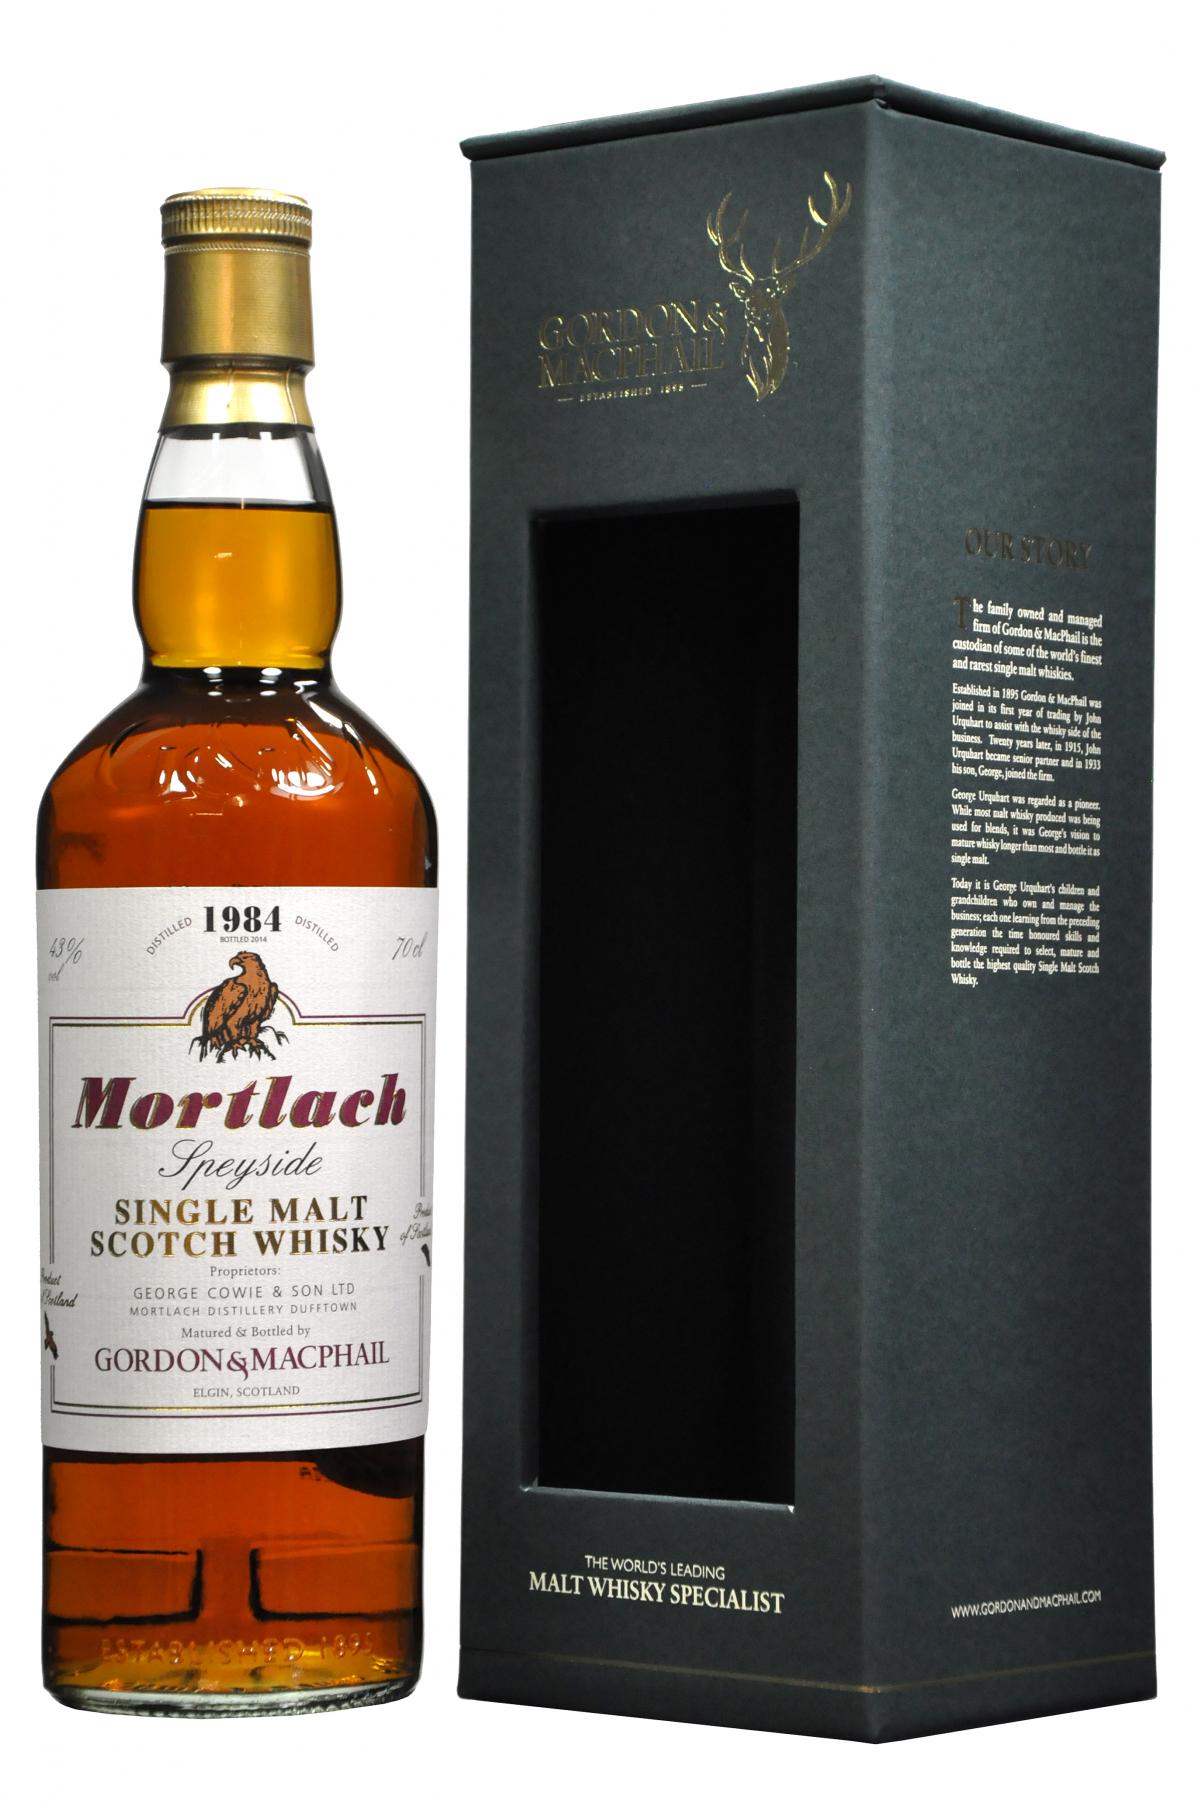 Mortlach 1984-2014, gordon & macphail, speyside single malt scotch whisky